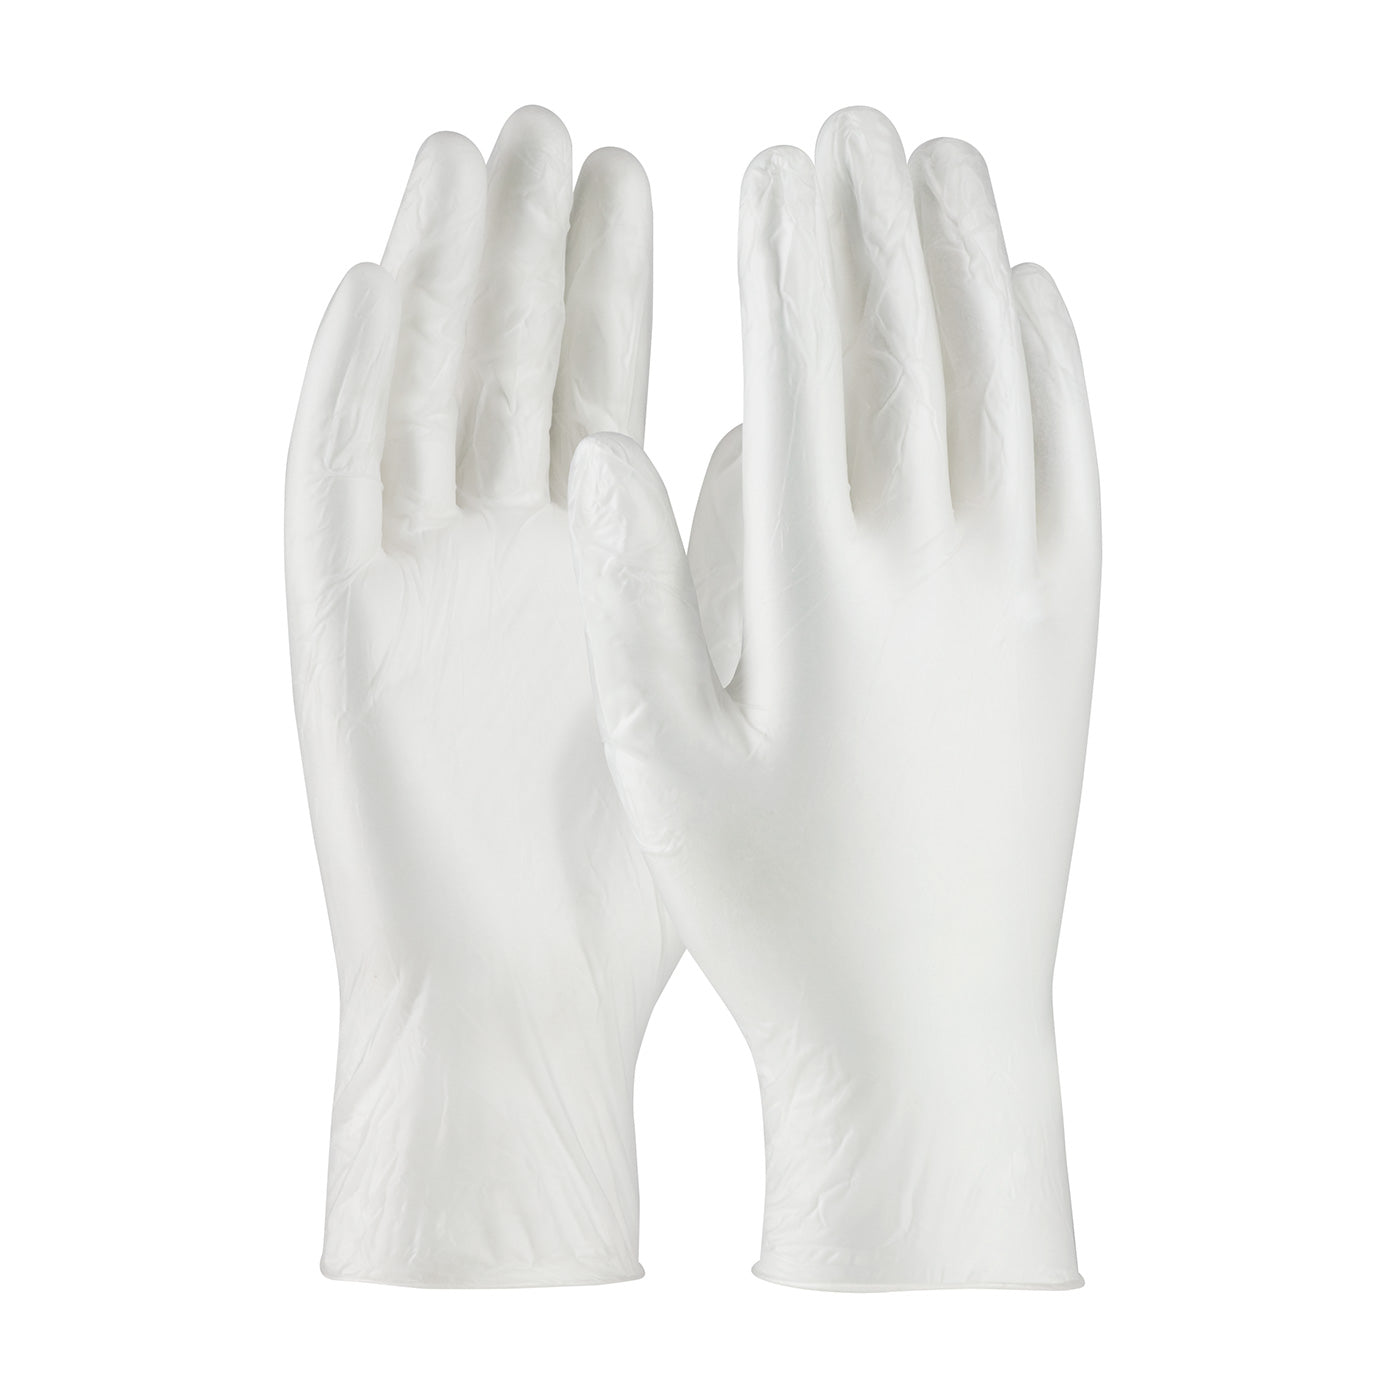 Ambi-dex 64-V3000/L Industrial Grade Disposable Vinyl Glove, Powdered - 3 Mil